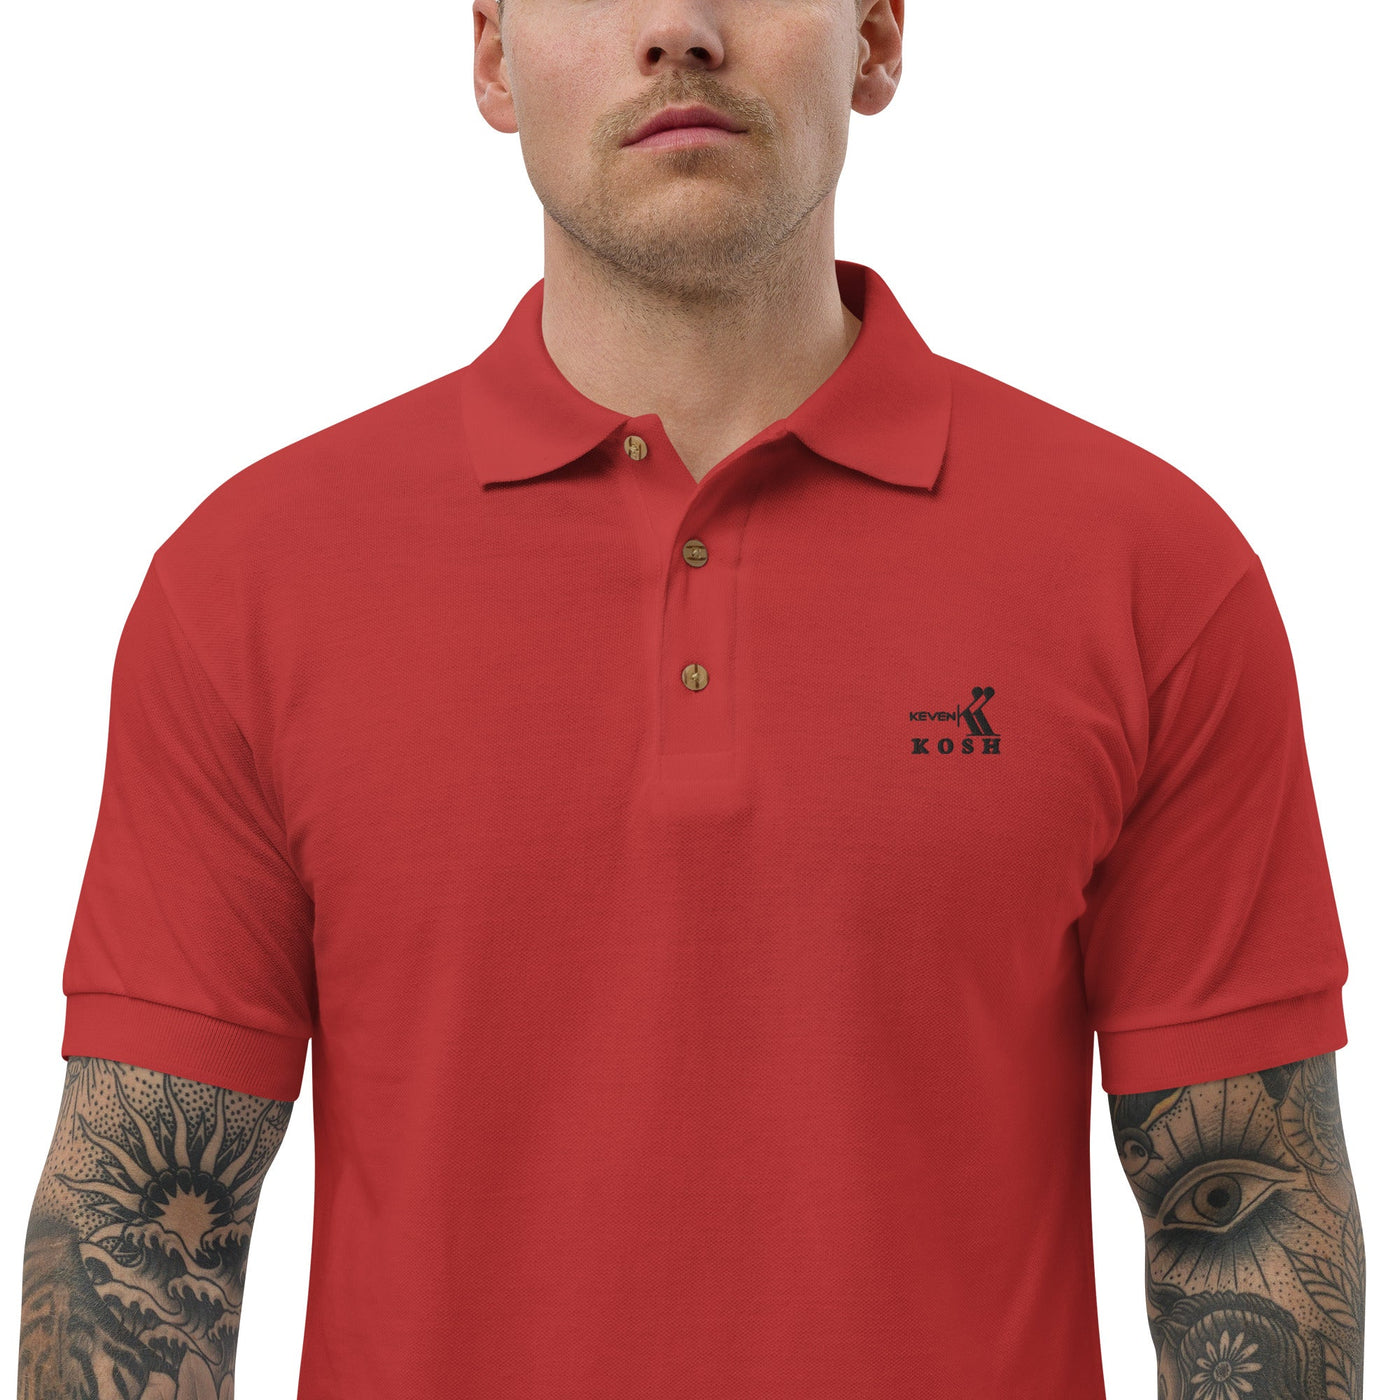 KevenKosh® Polo T-Shirt Men KevenKosh Red S 